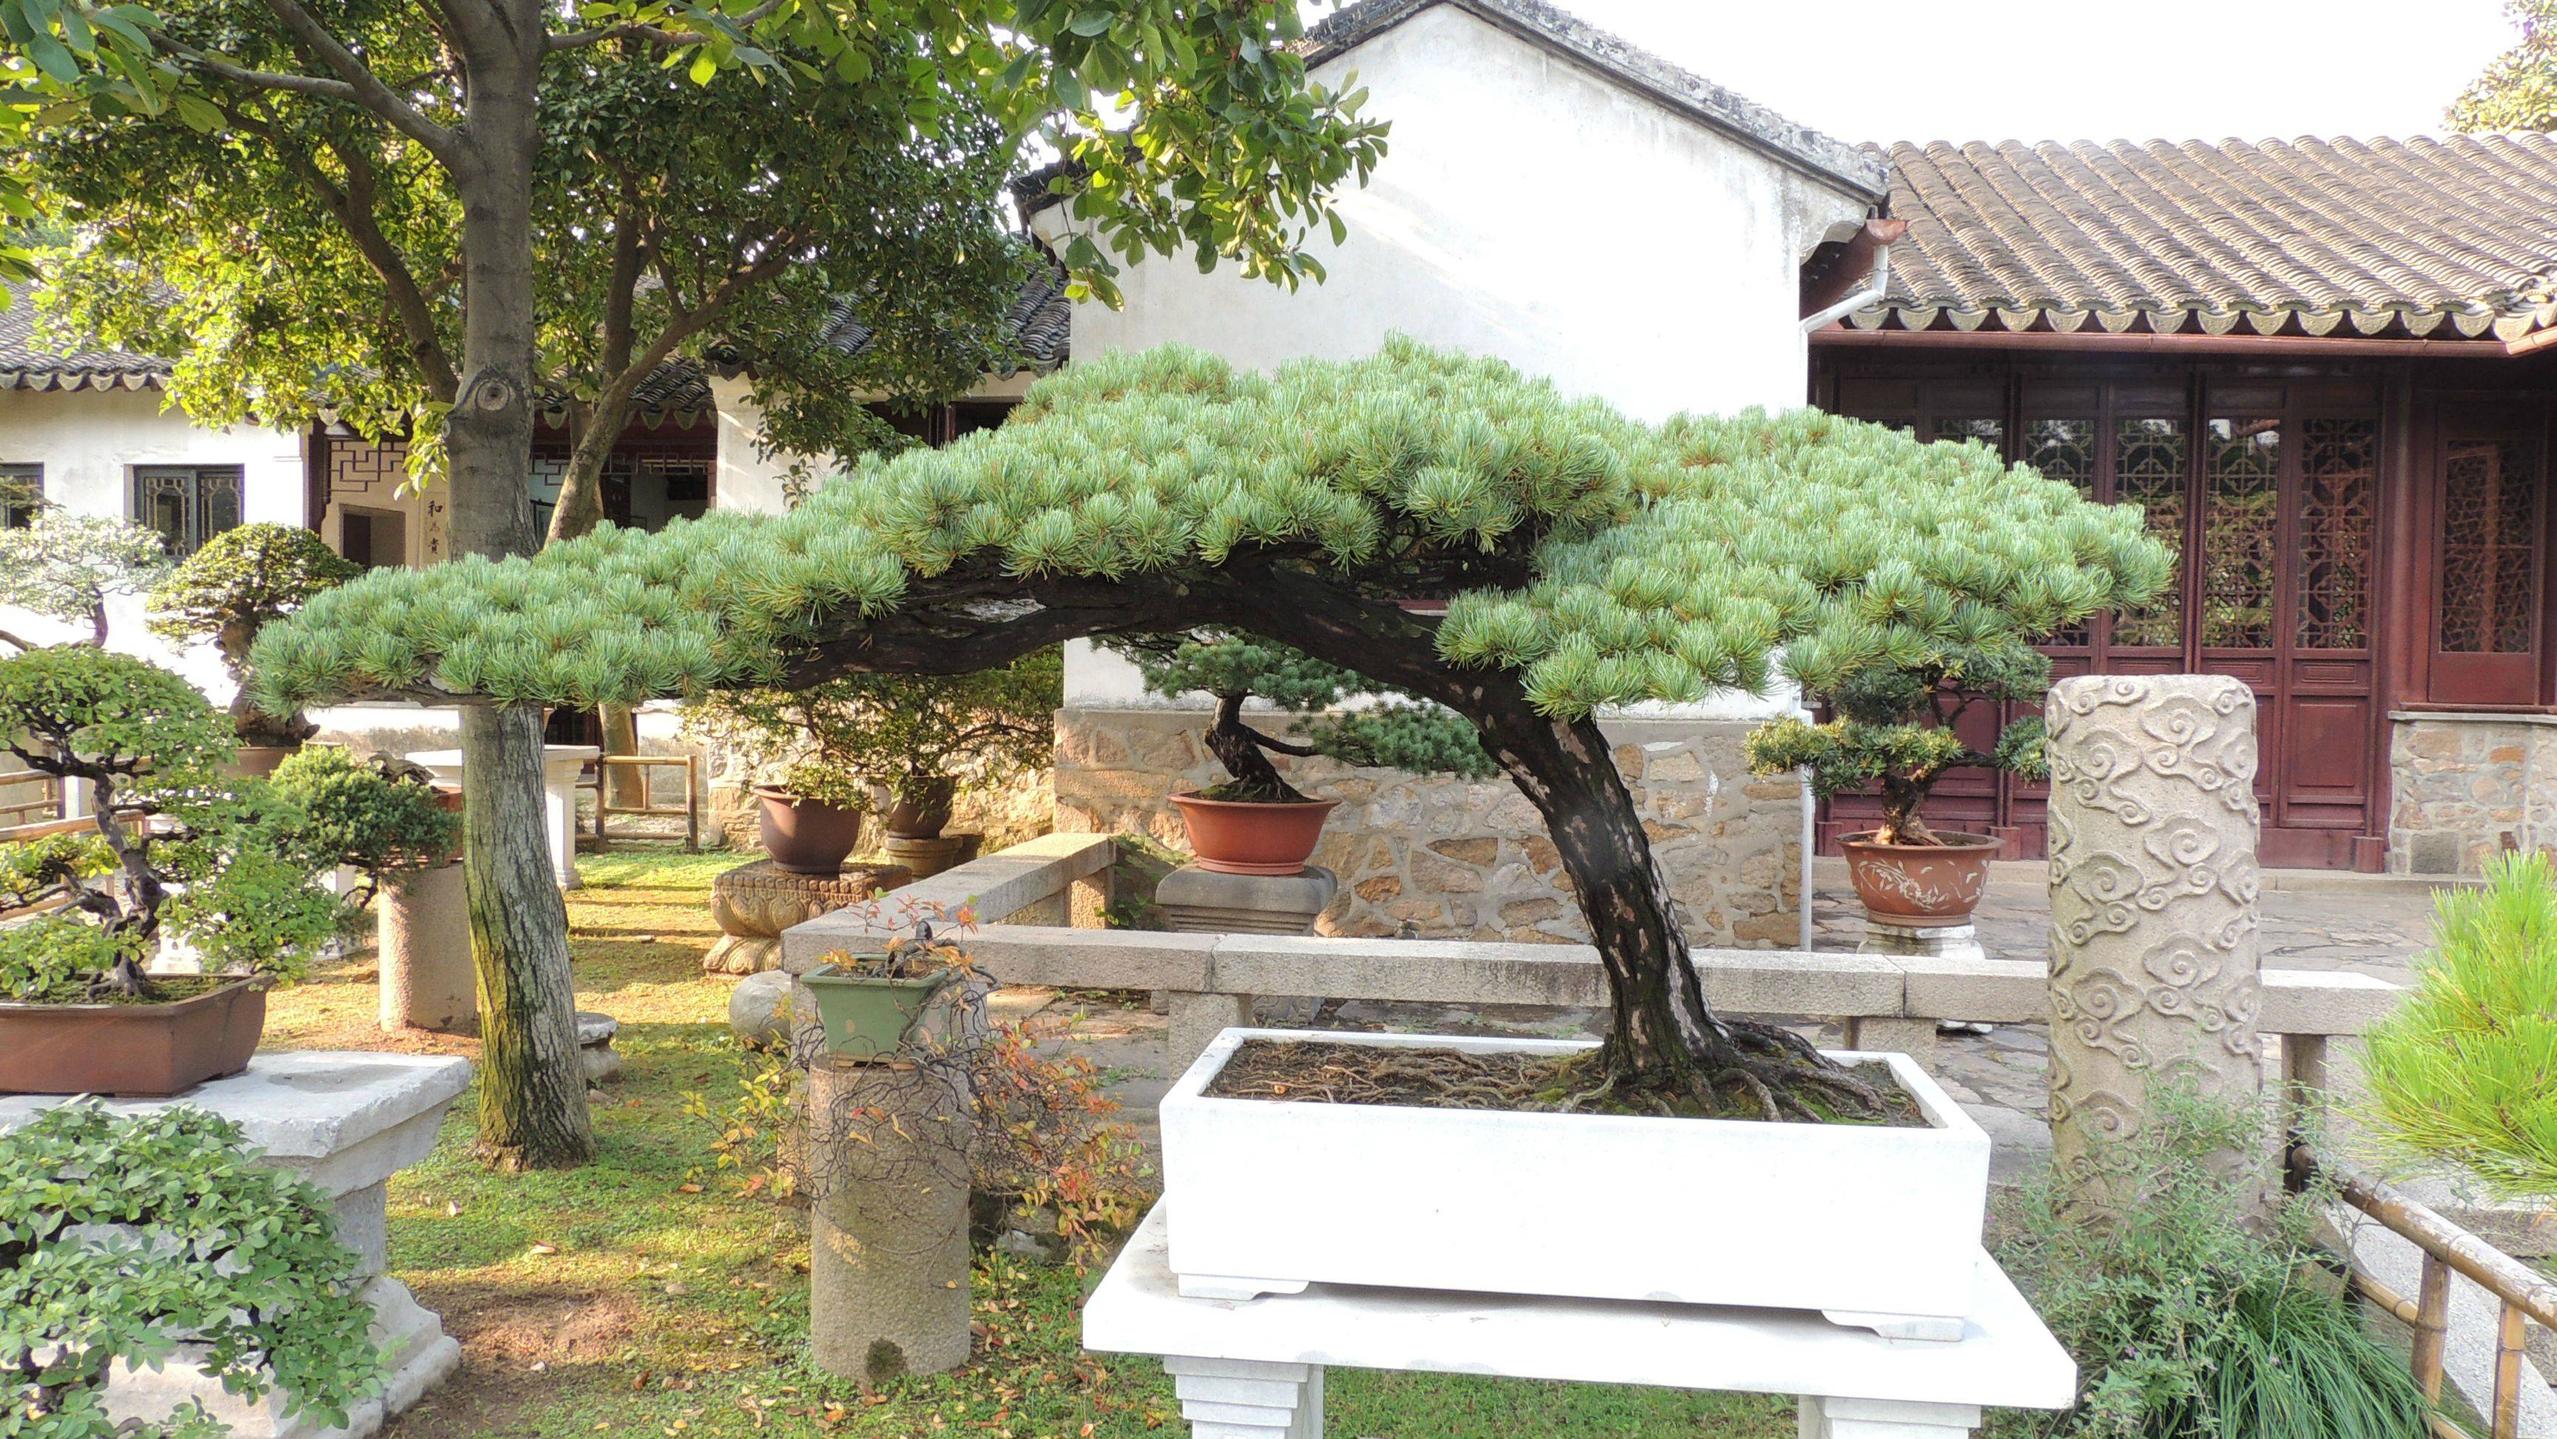 Mature bonsai plants